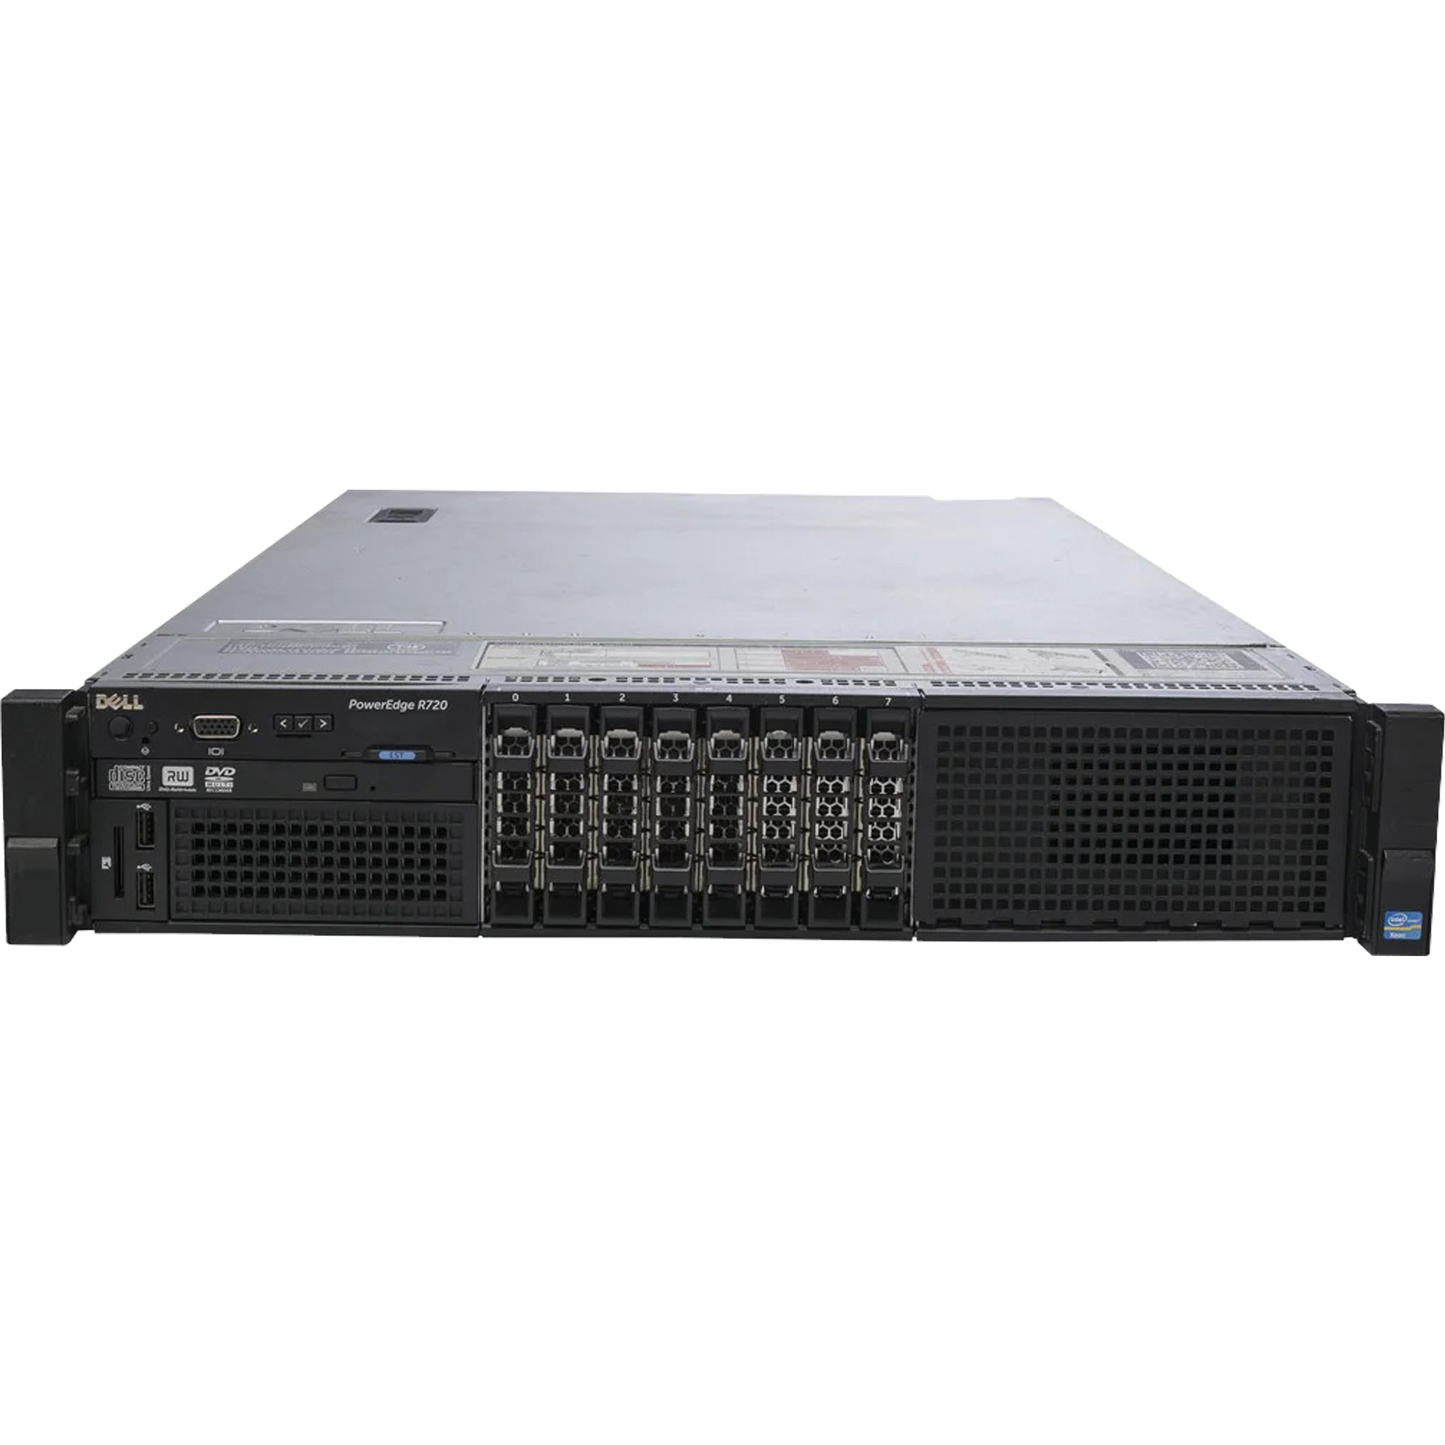 Dell PowerEdge R720 - 2 x 8 Core Intel Xeon CPU Server - 3.5" Backplane Servers